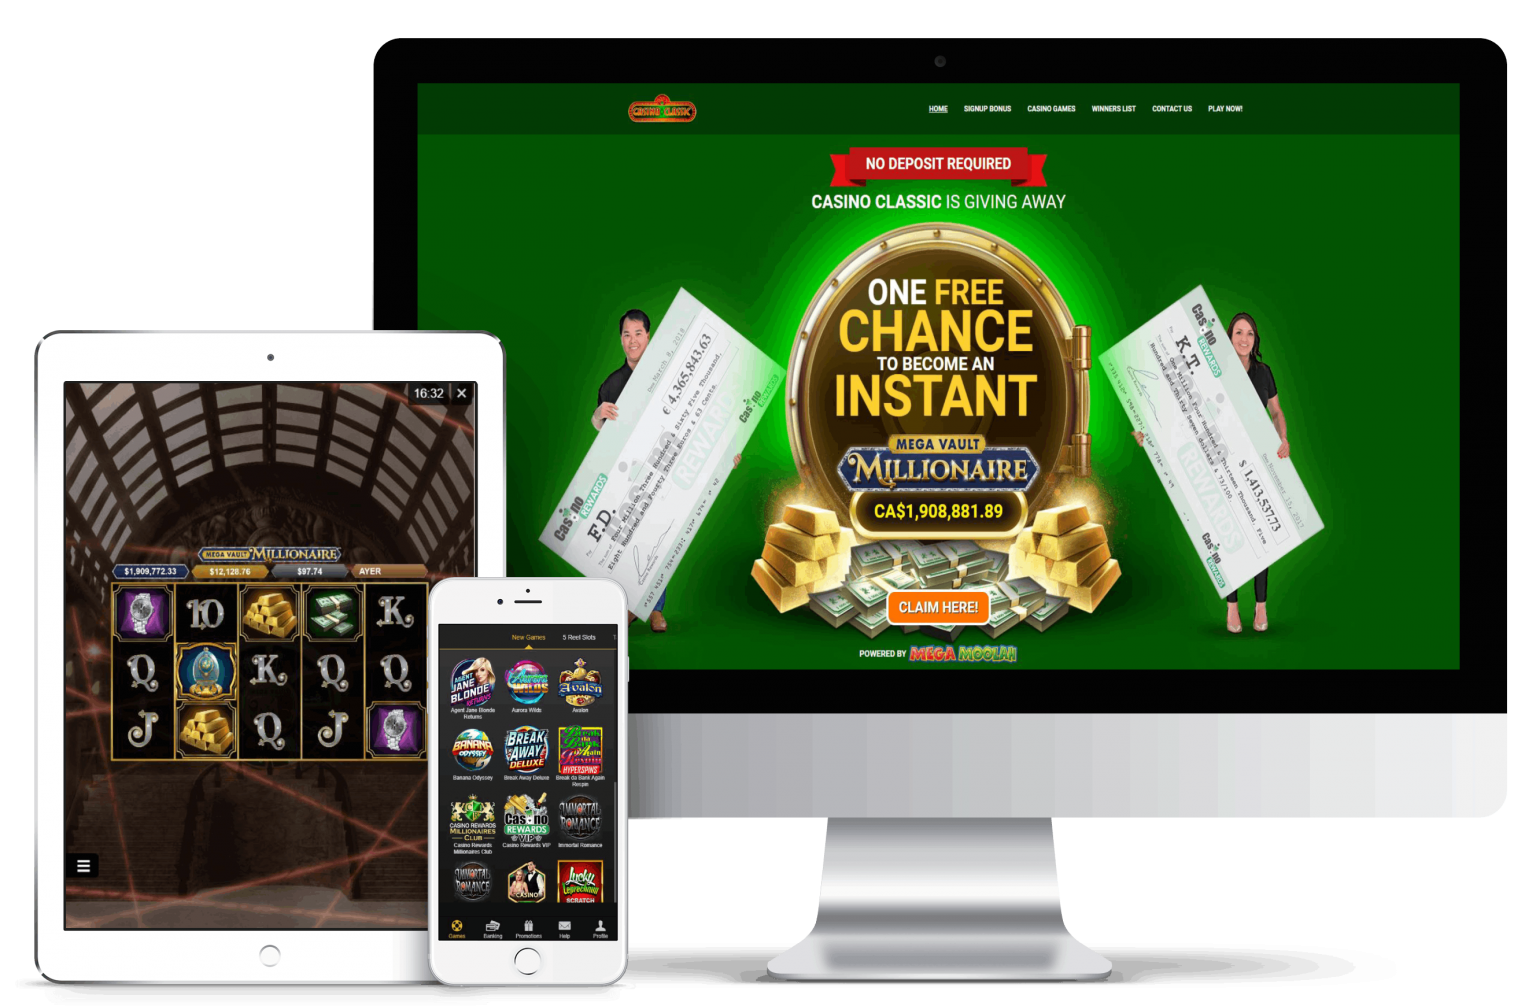 7k 7k kasino website. Казино Классик. Казино Классик 2012г. Grand Mondial Casino.